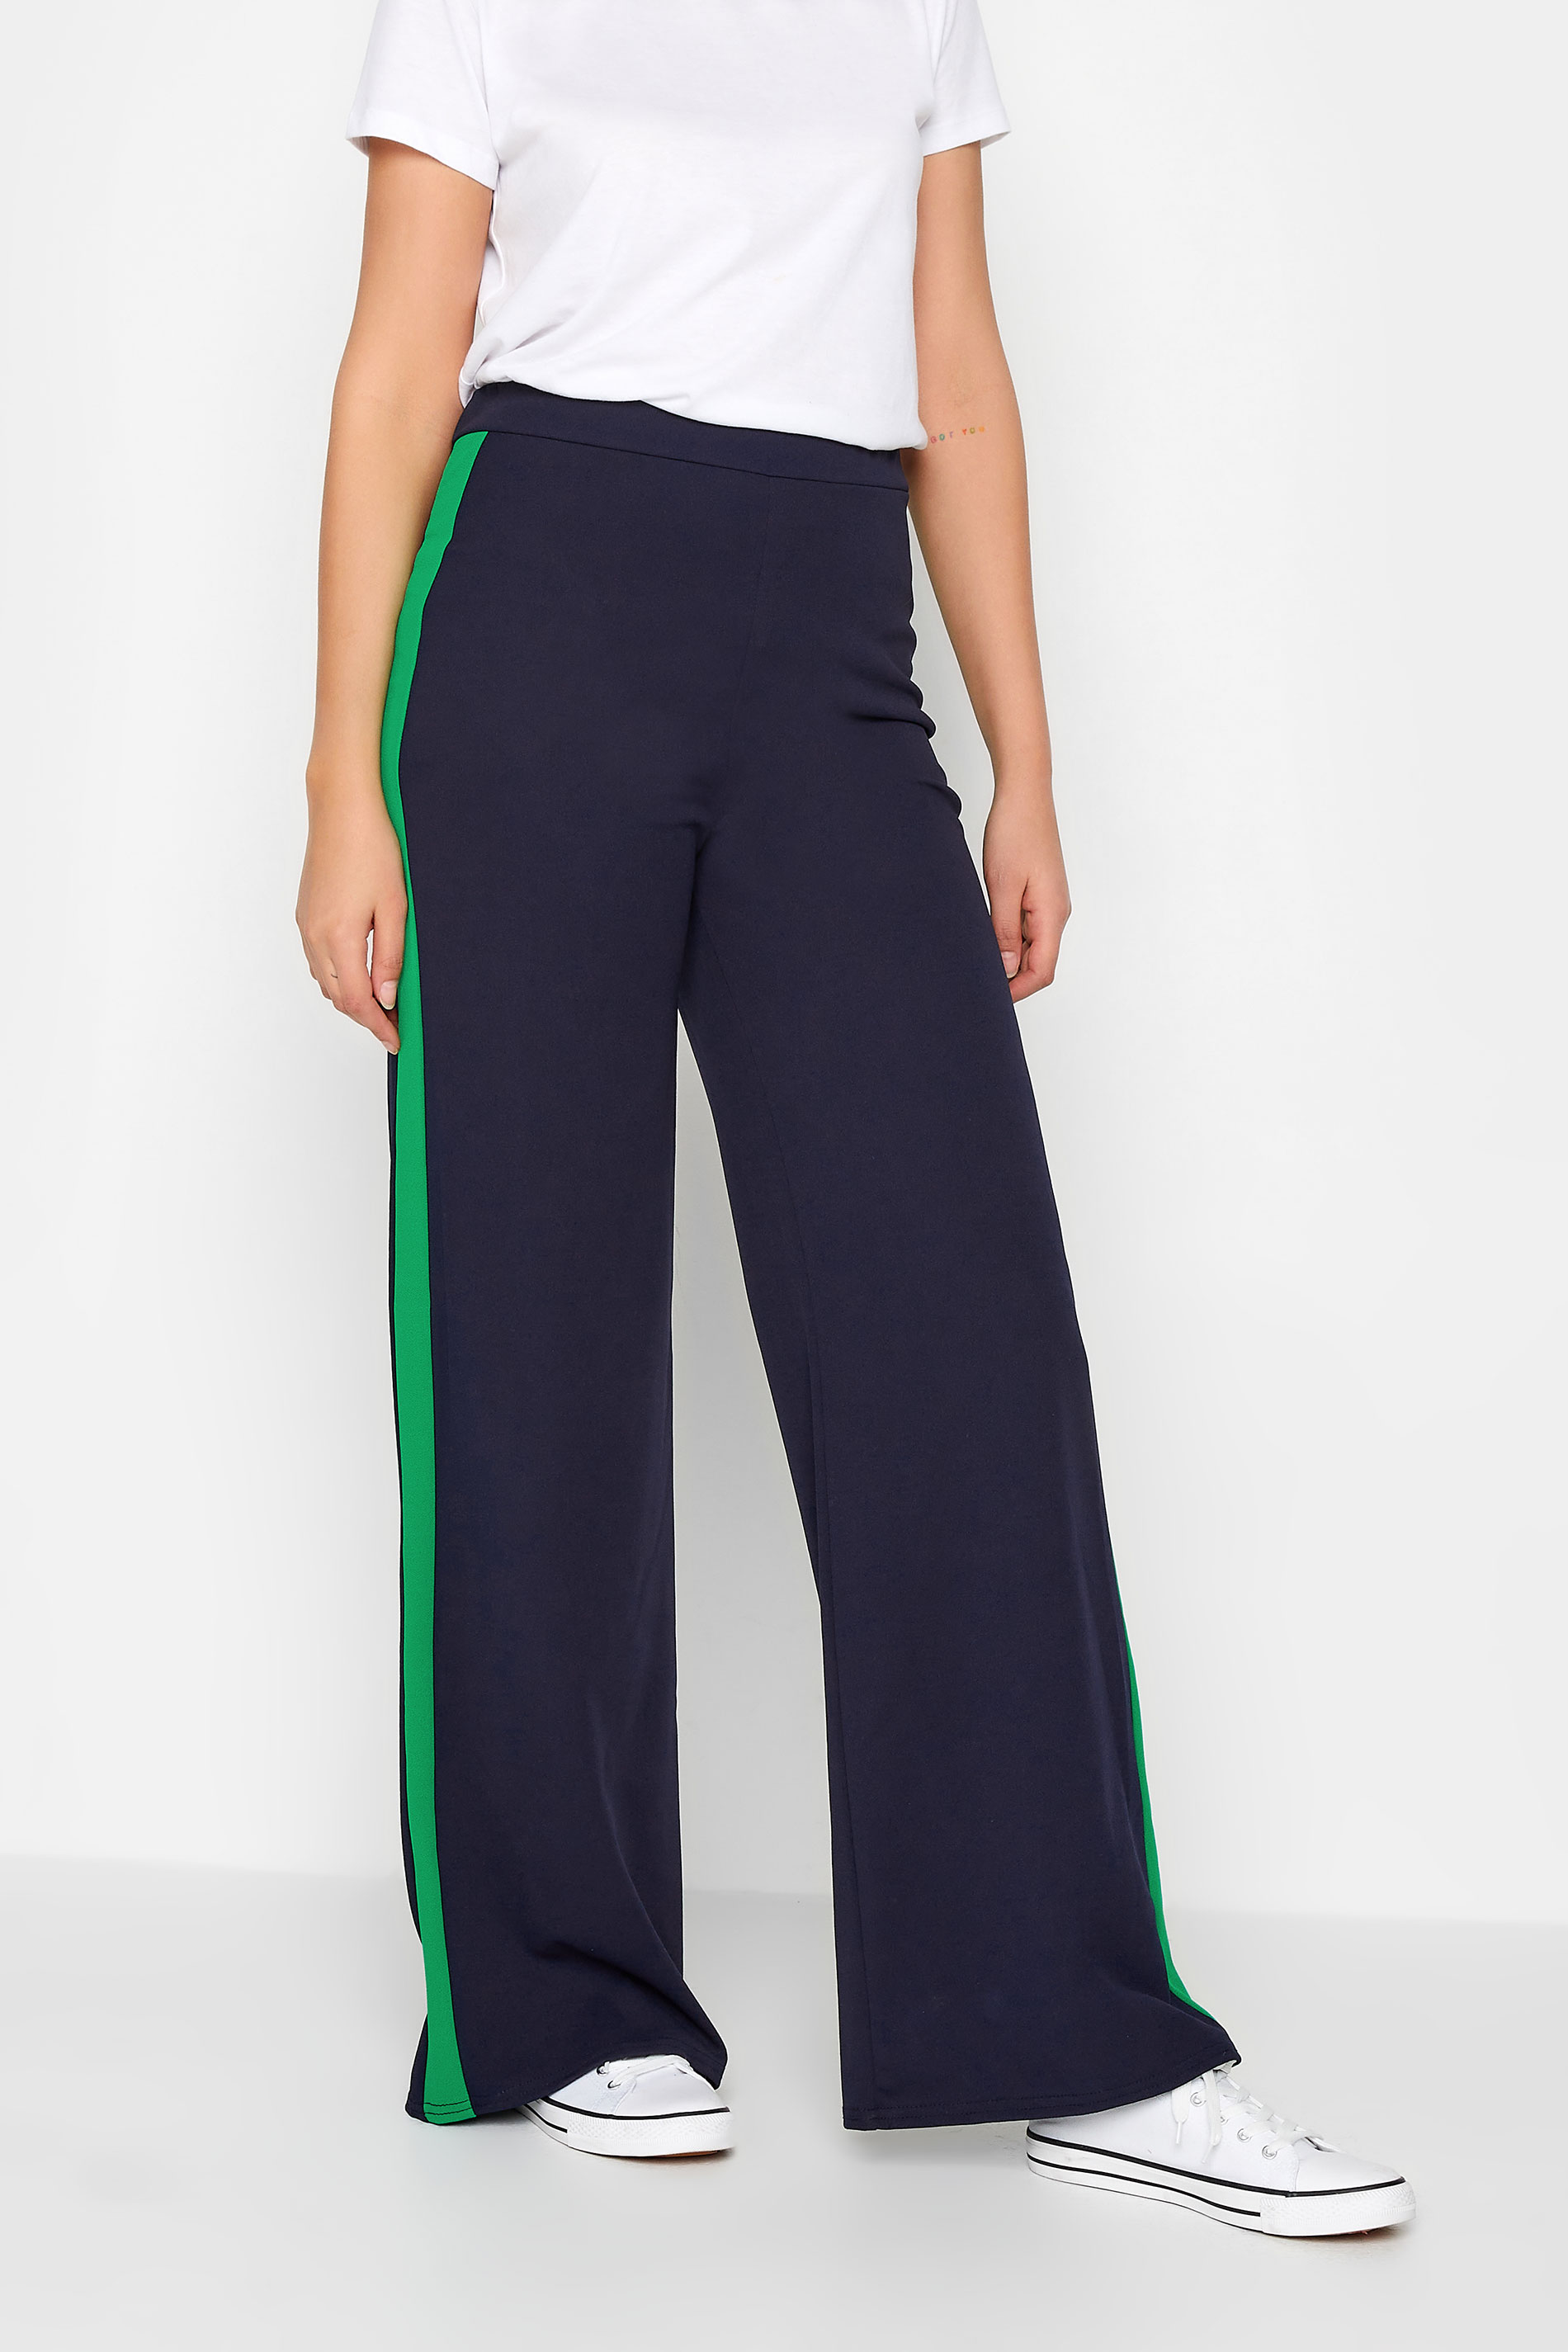 LTS Tall Womens Navy Blue & Green Stripe Wide Leg Trousers | Long Tall Sally 1